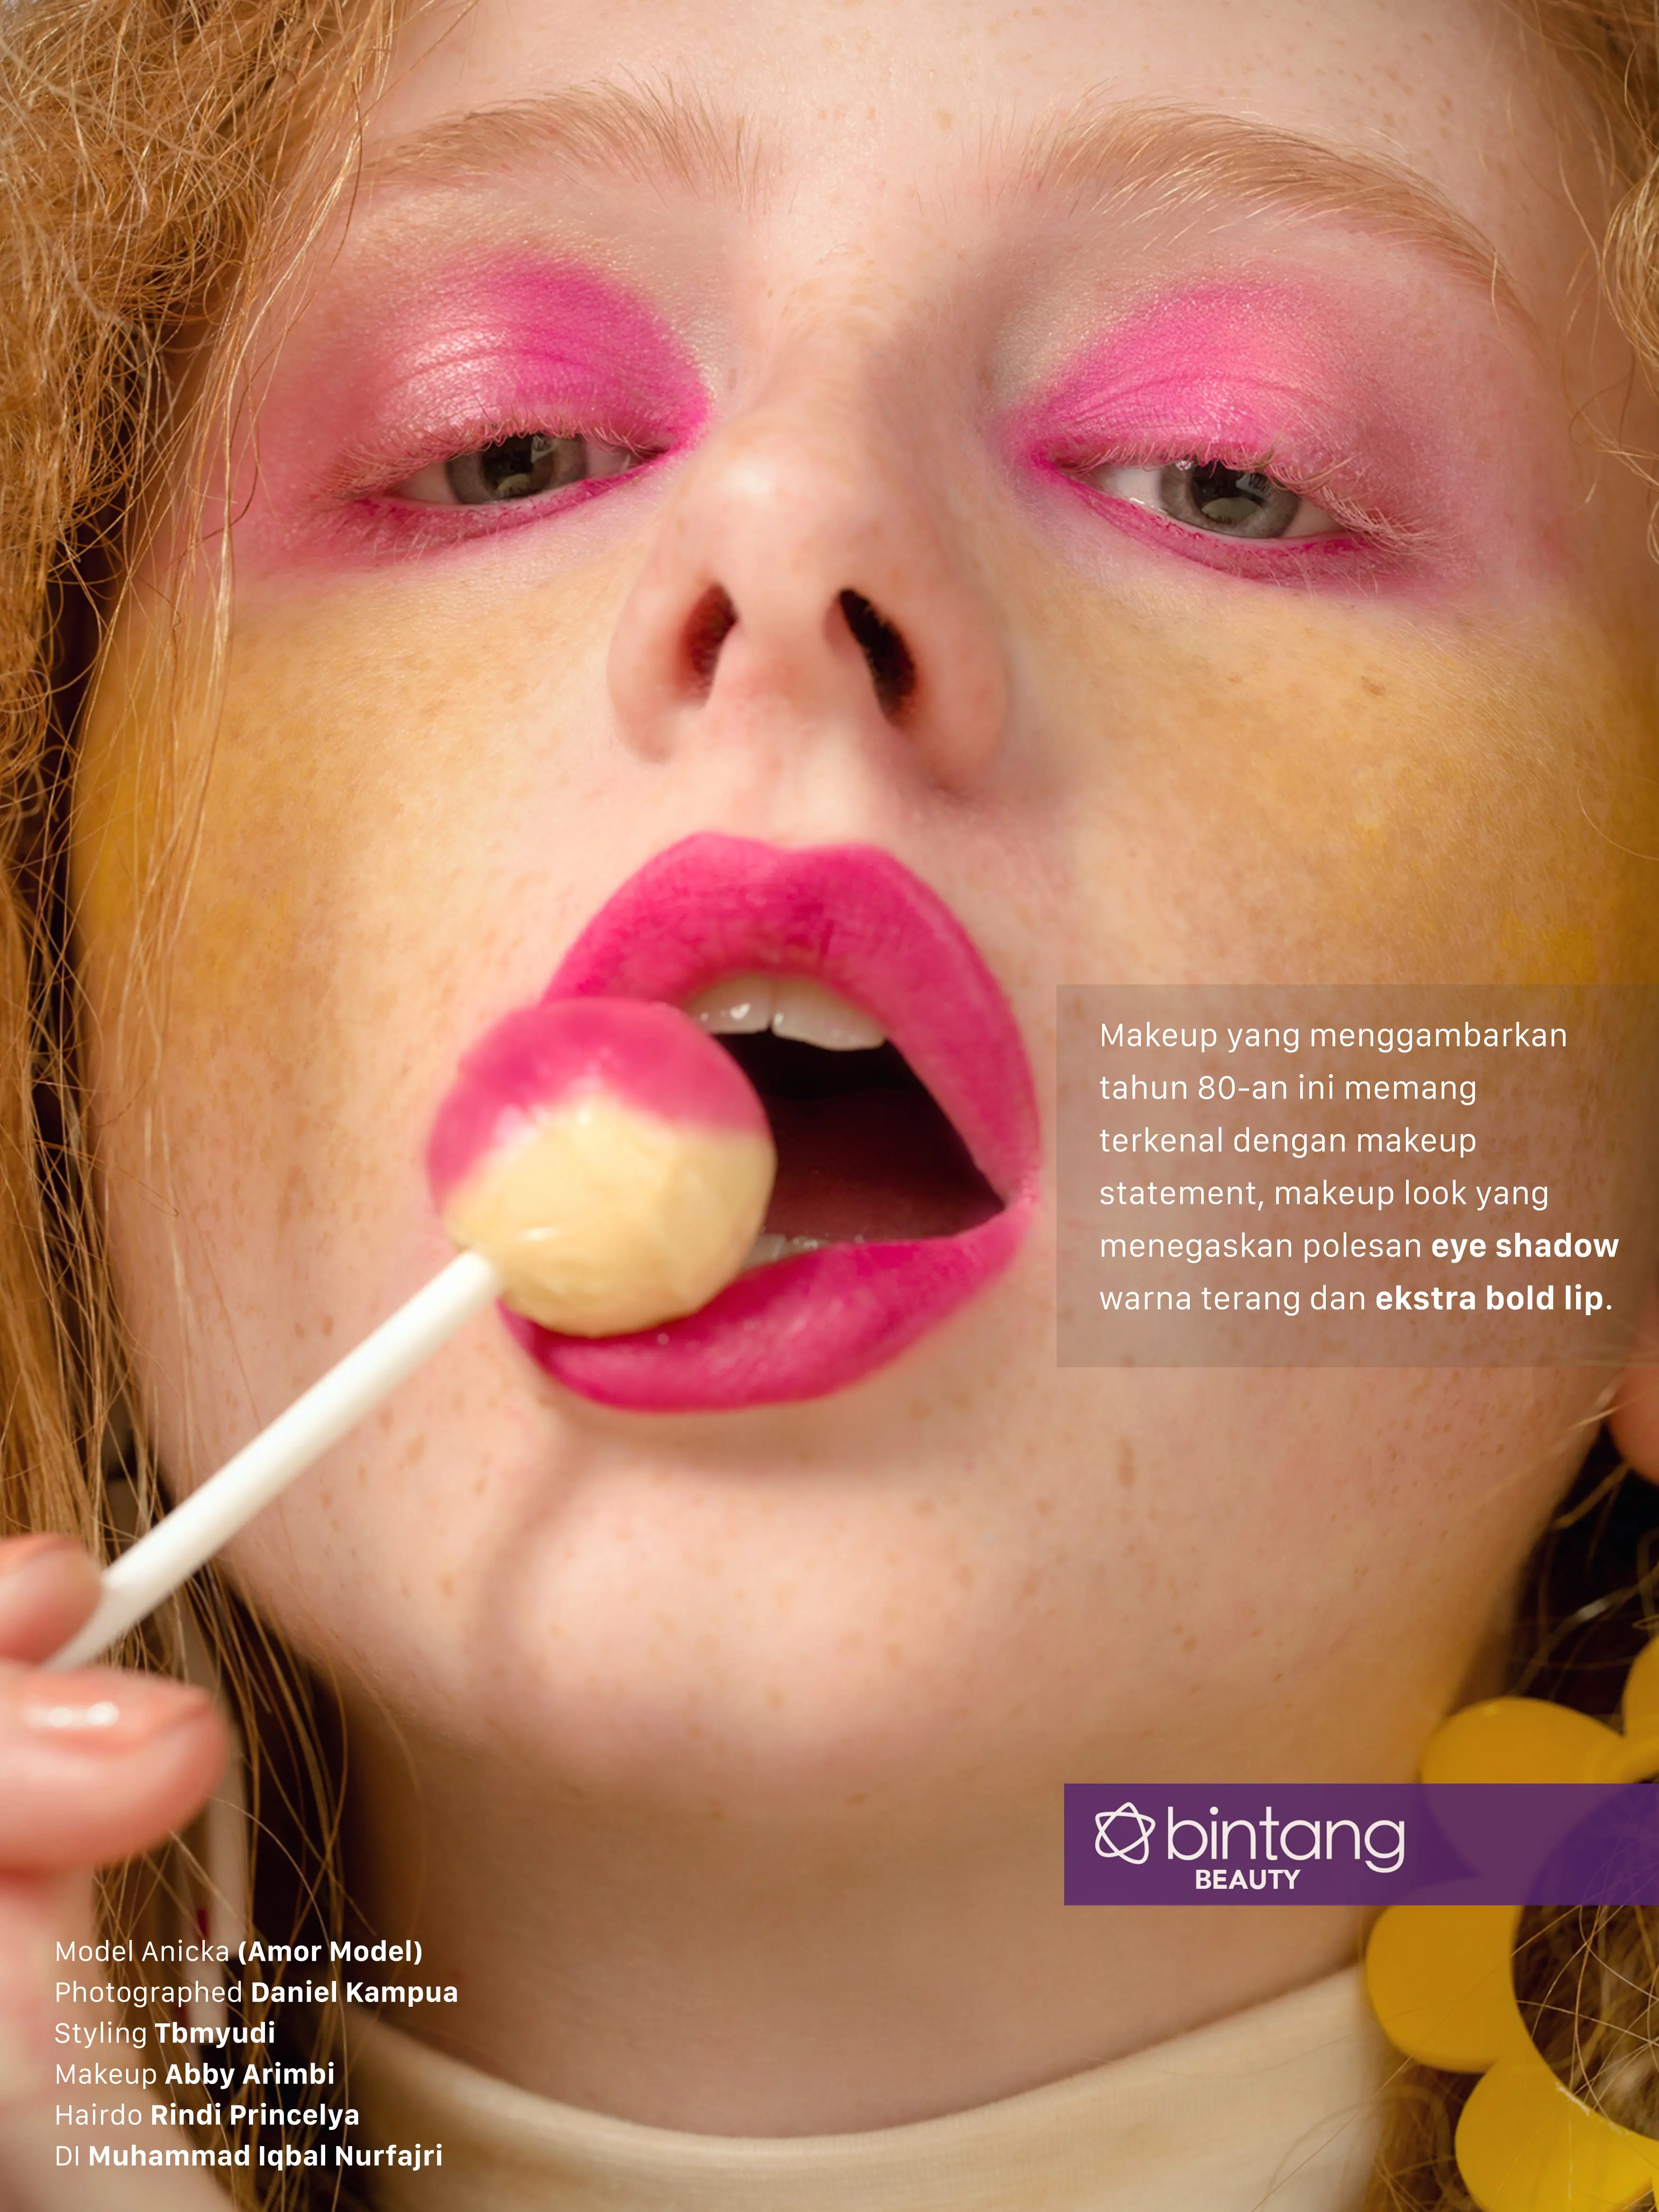 Makeup strong dengan pemilihan bold lip menjadi statement di look ala 80-an ini.